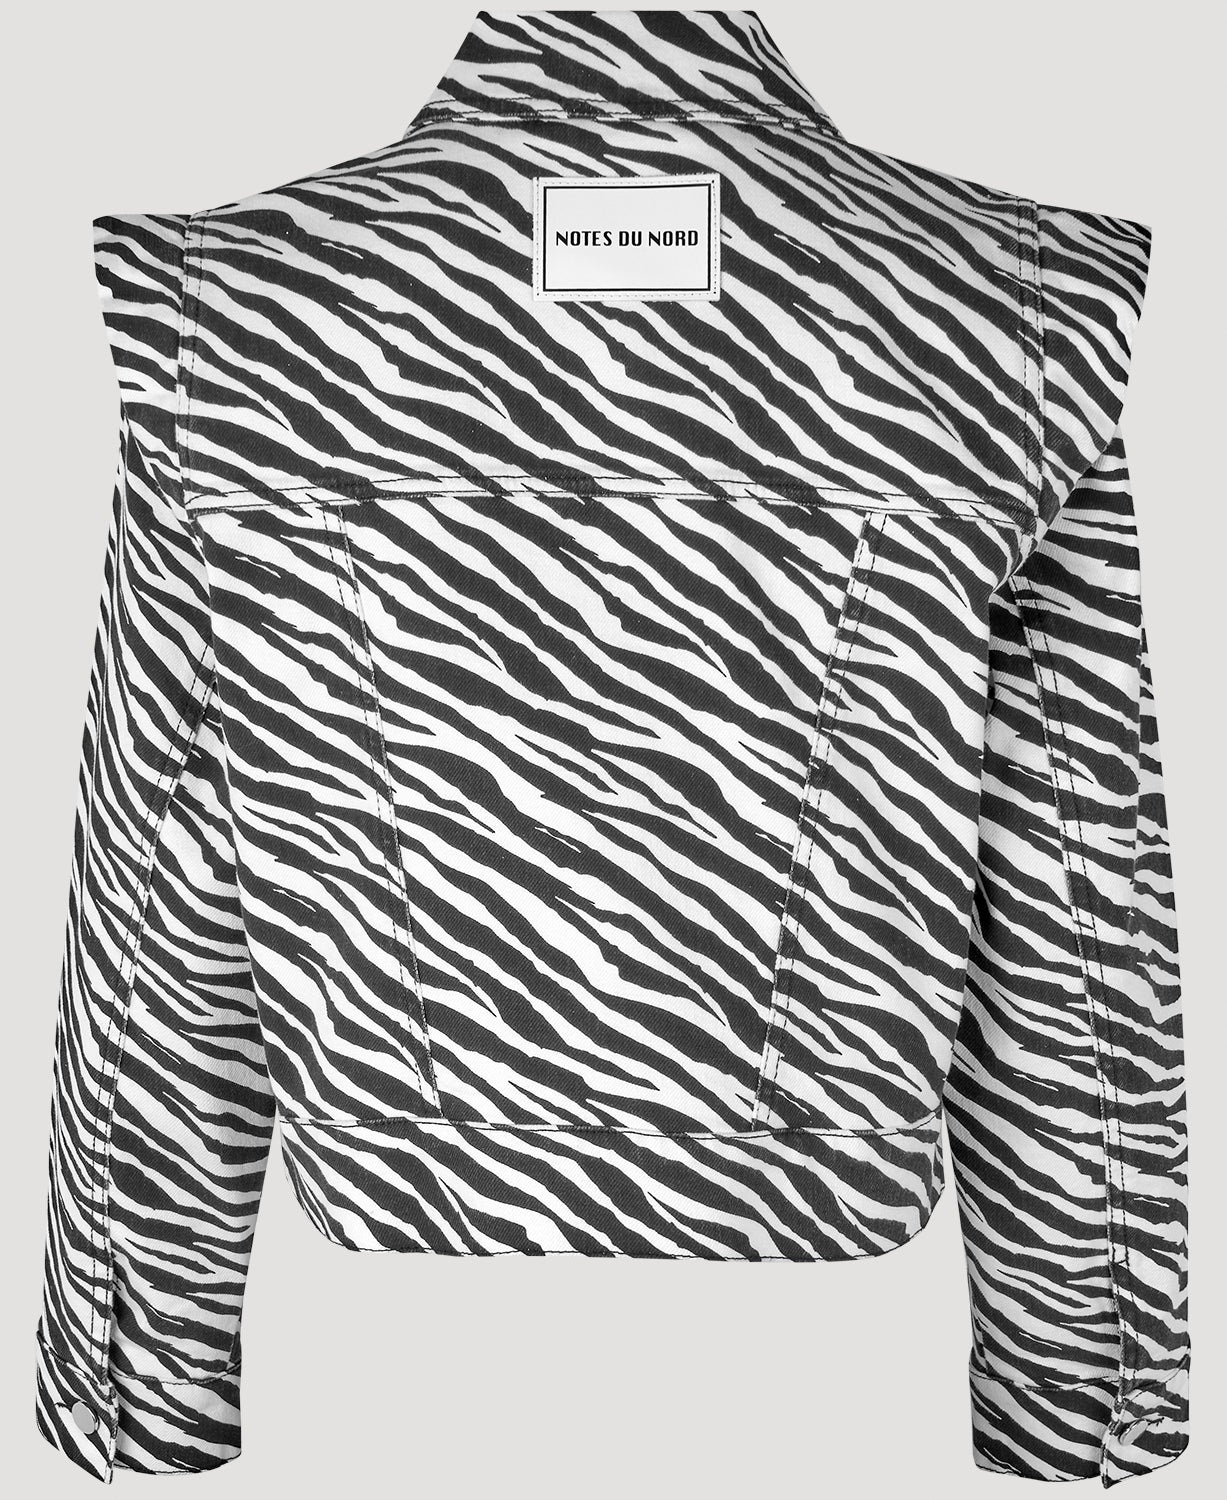 Notes du Nord Gia Denim Jacket Jacket 913 Zebra